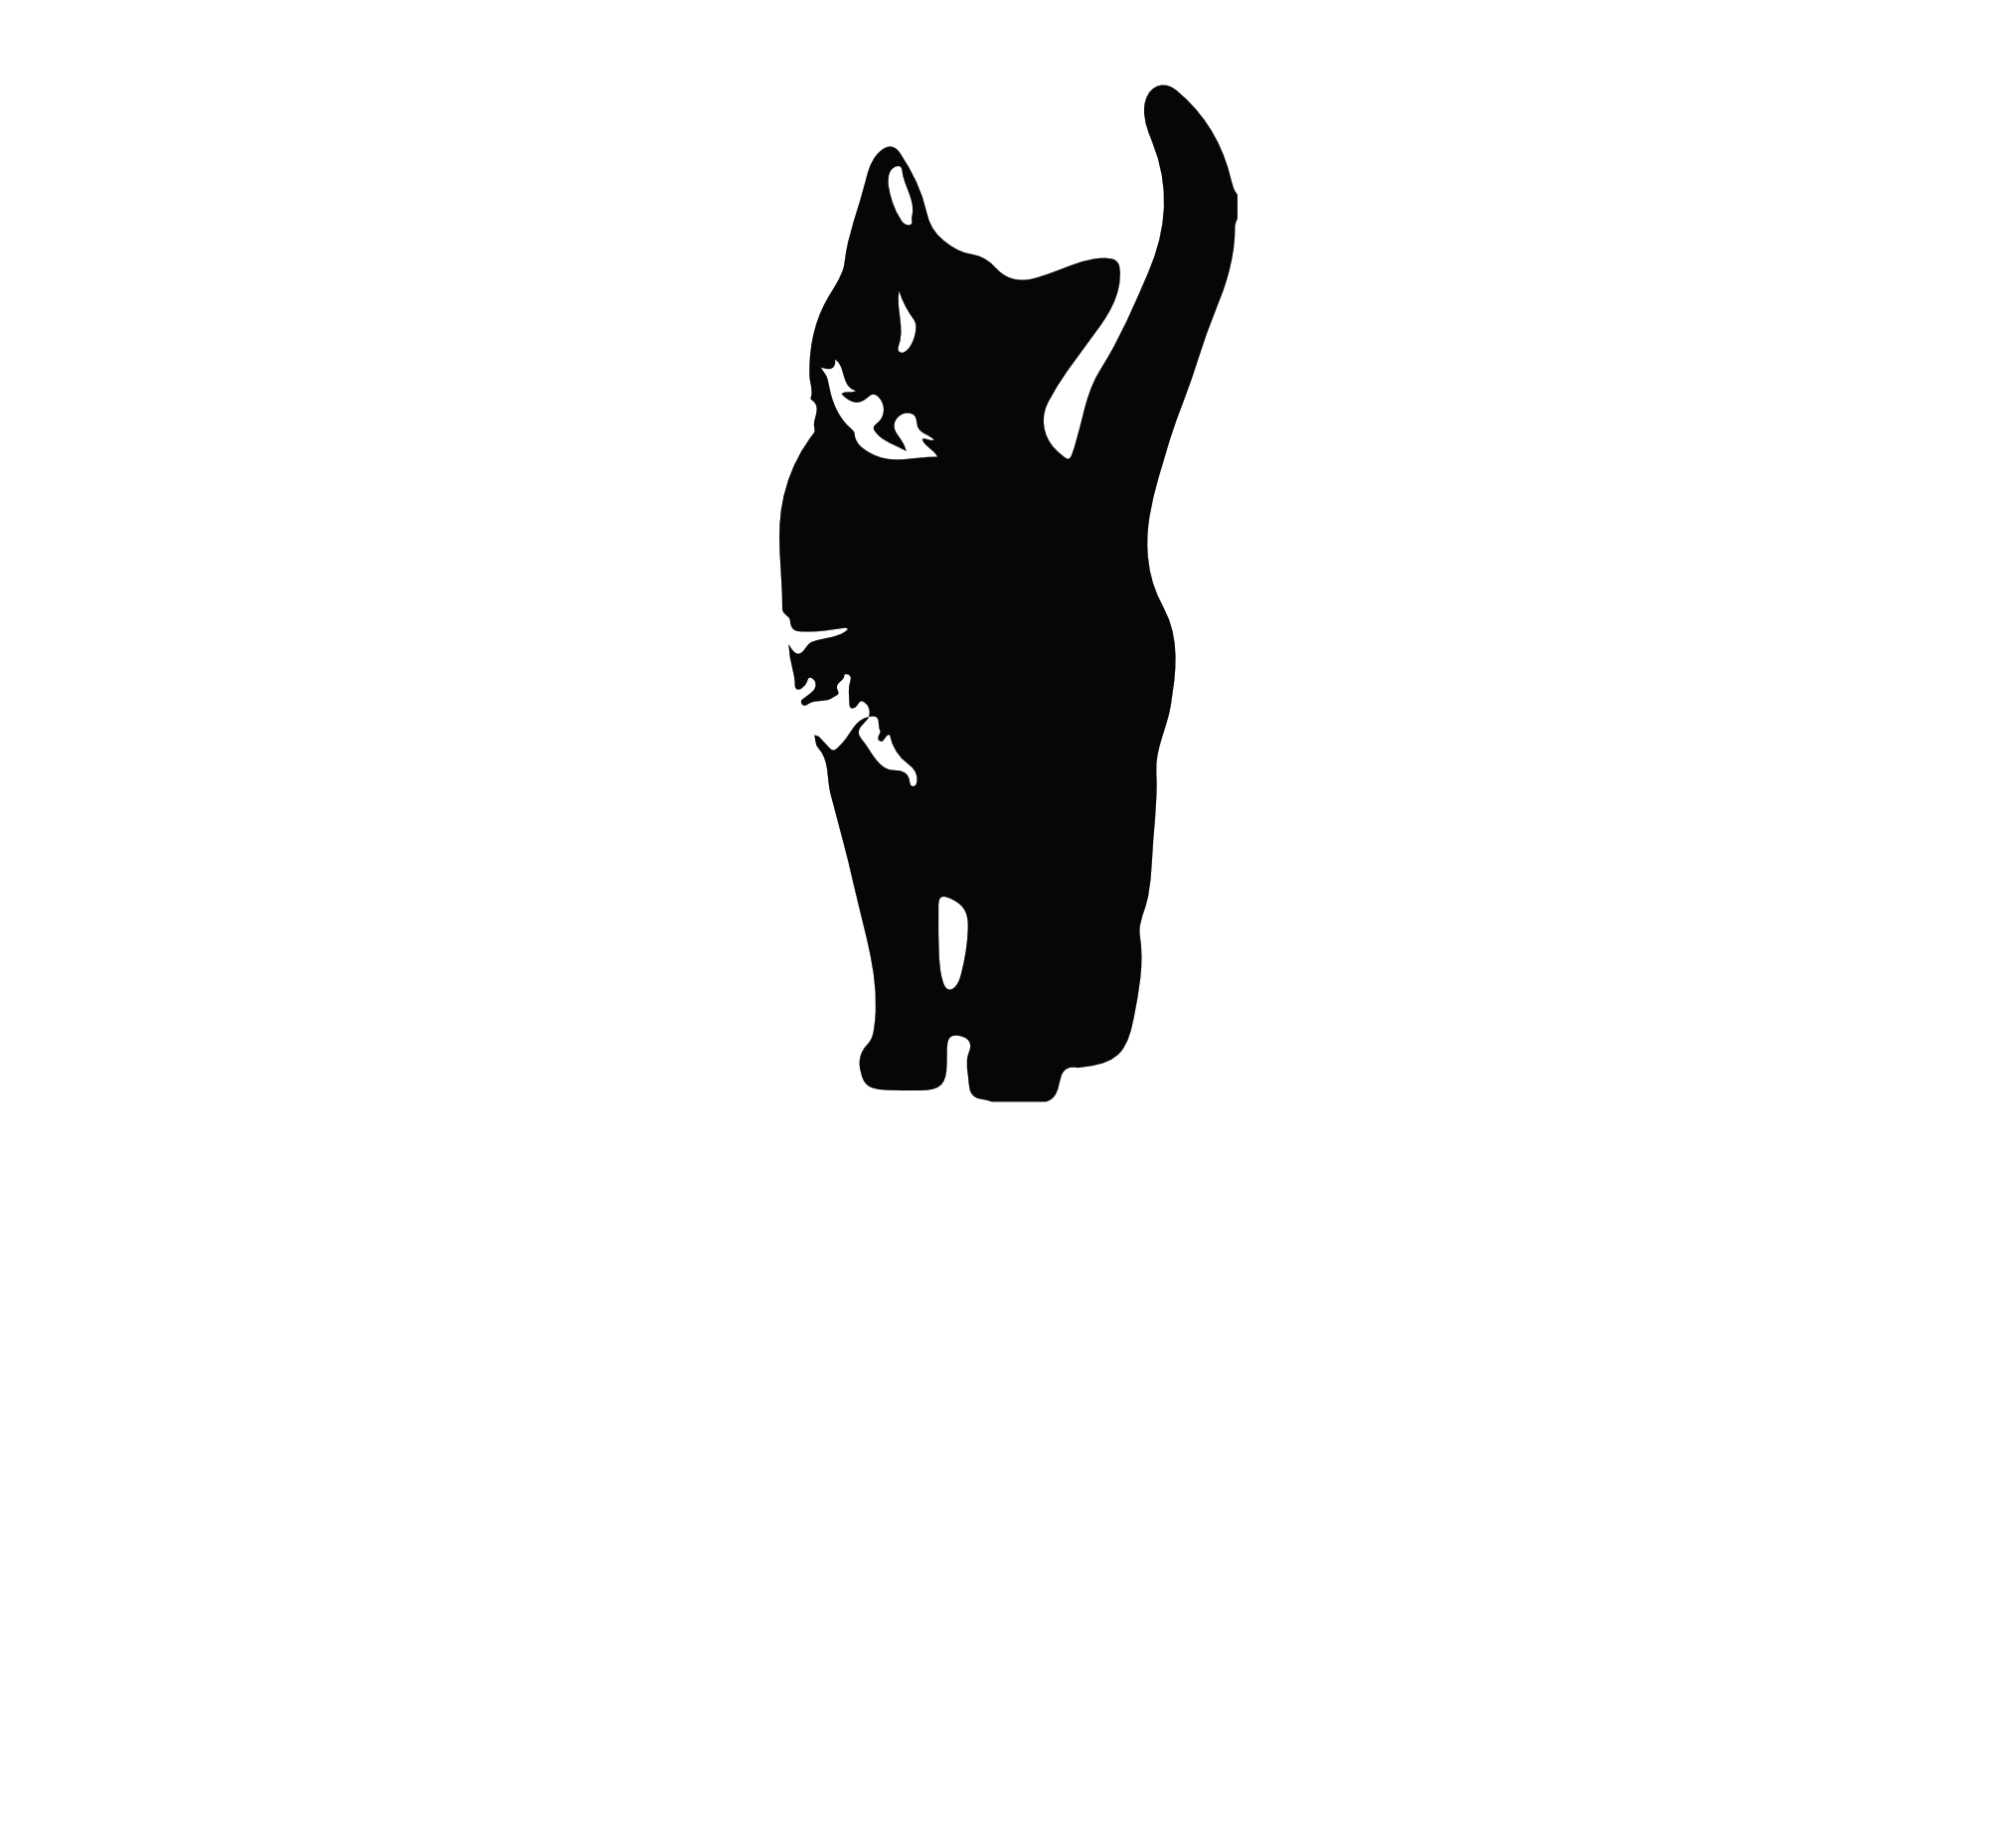 curiosity white text